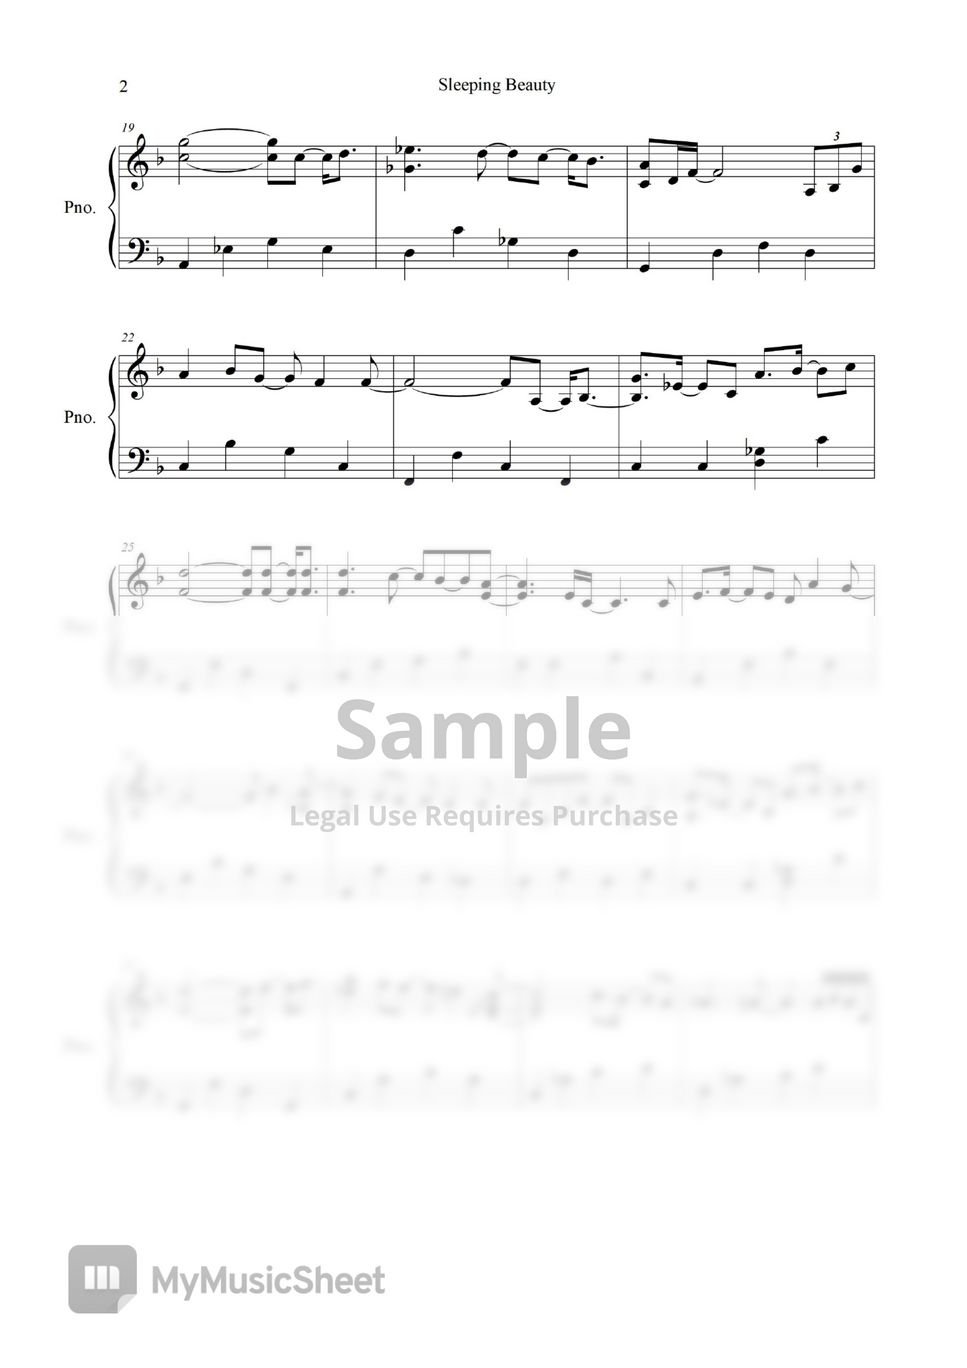 paul - Sleeping Beauty (heart signal bgm) by freestyle pianoman